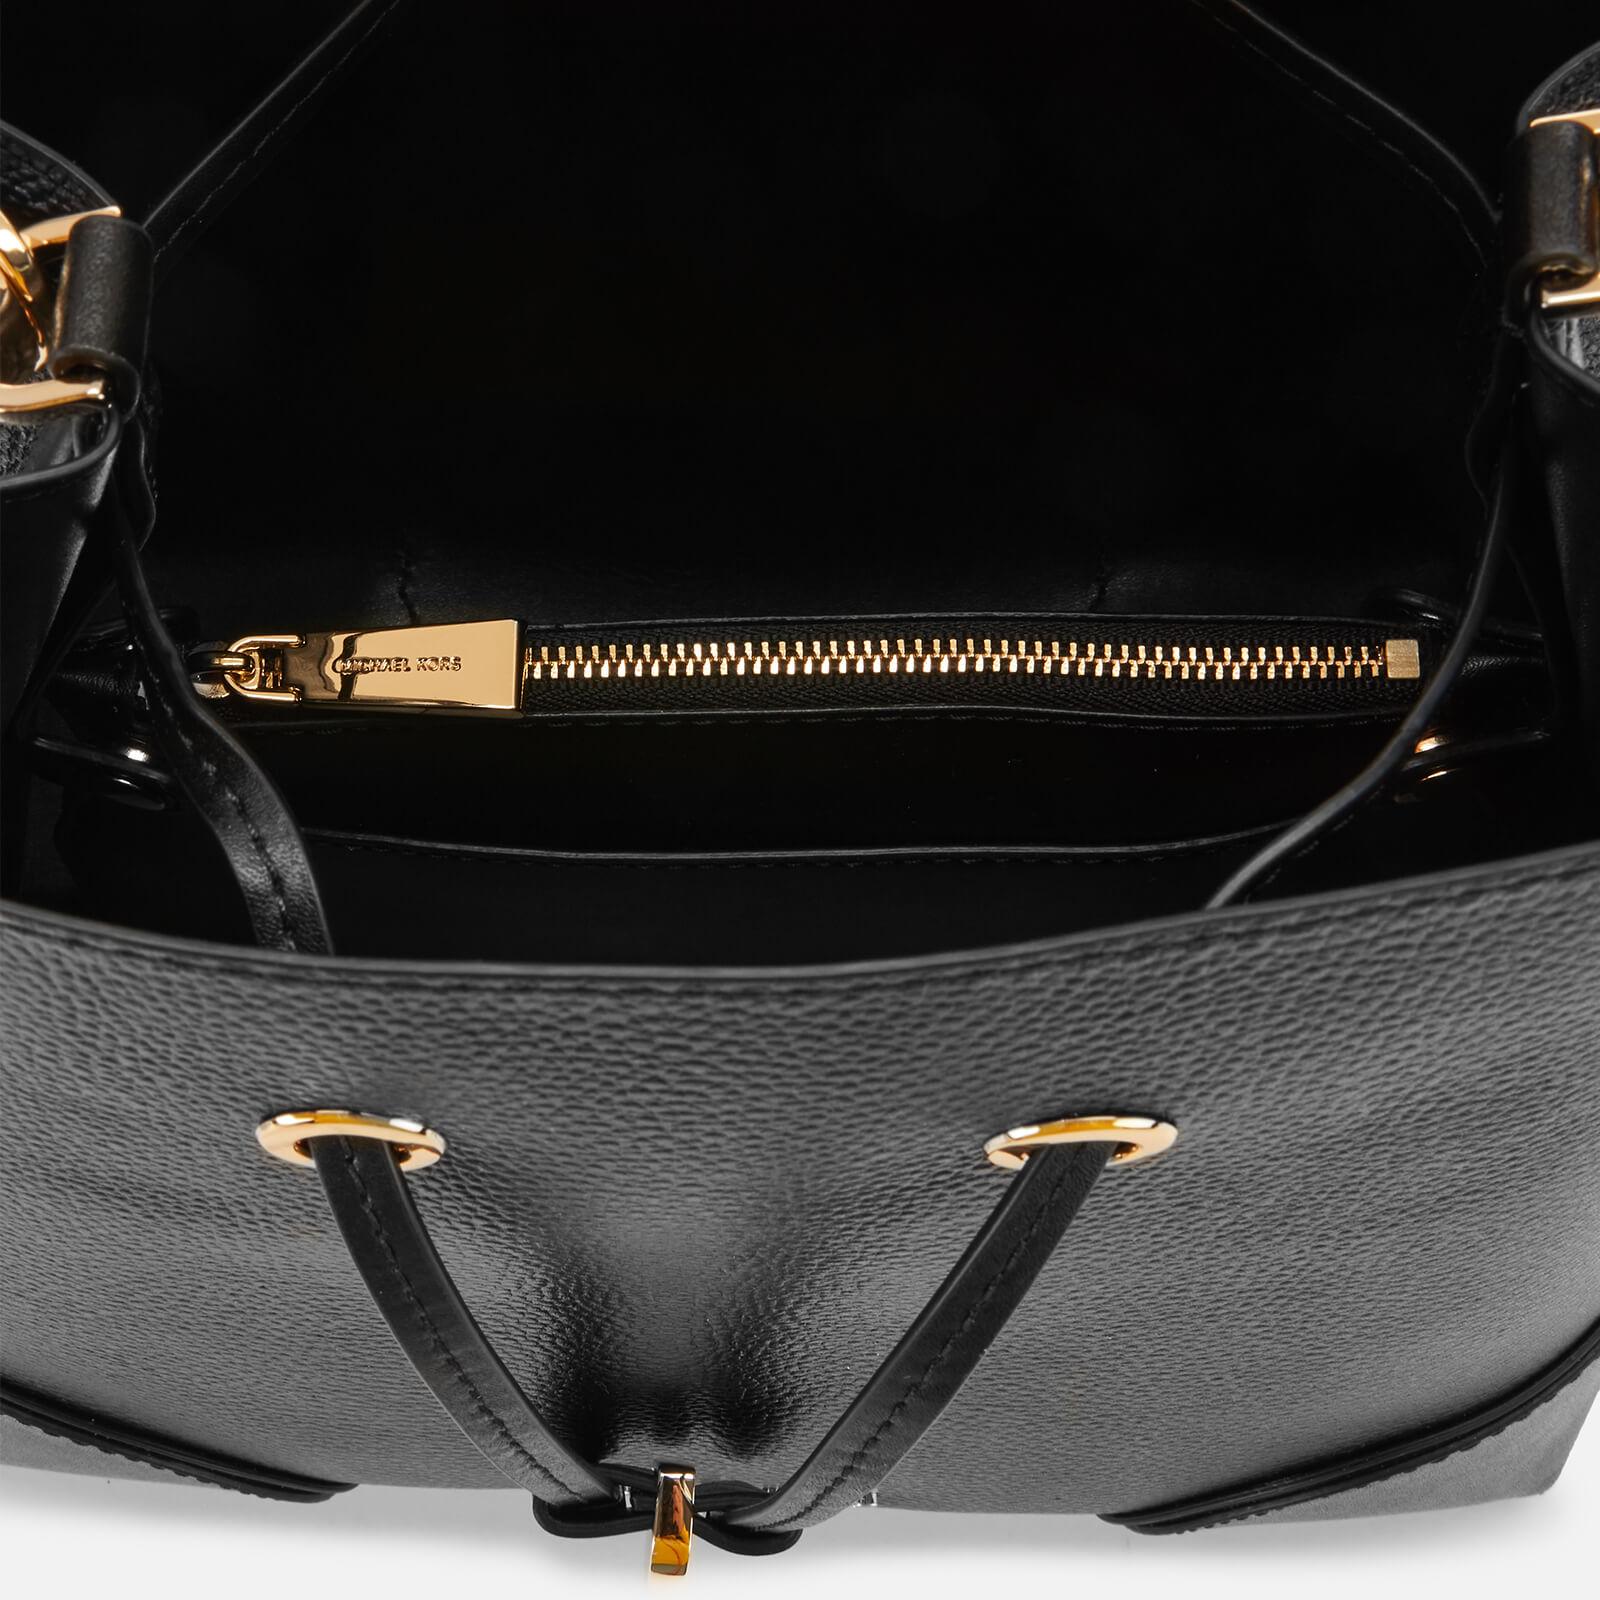 Michael Kors Mercer Gallery Medium Convertible Bucket Bag in Black